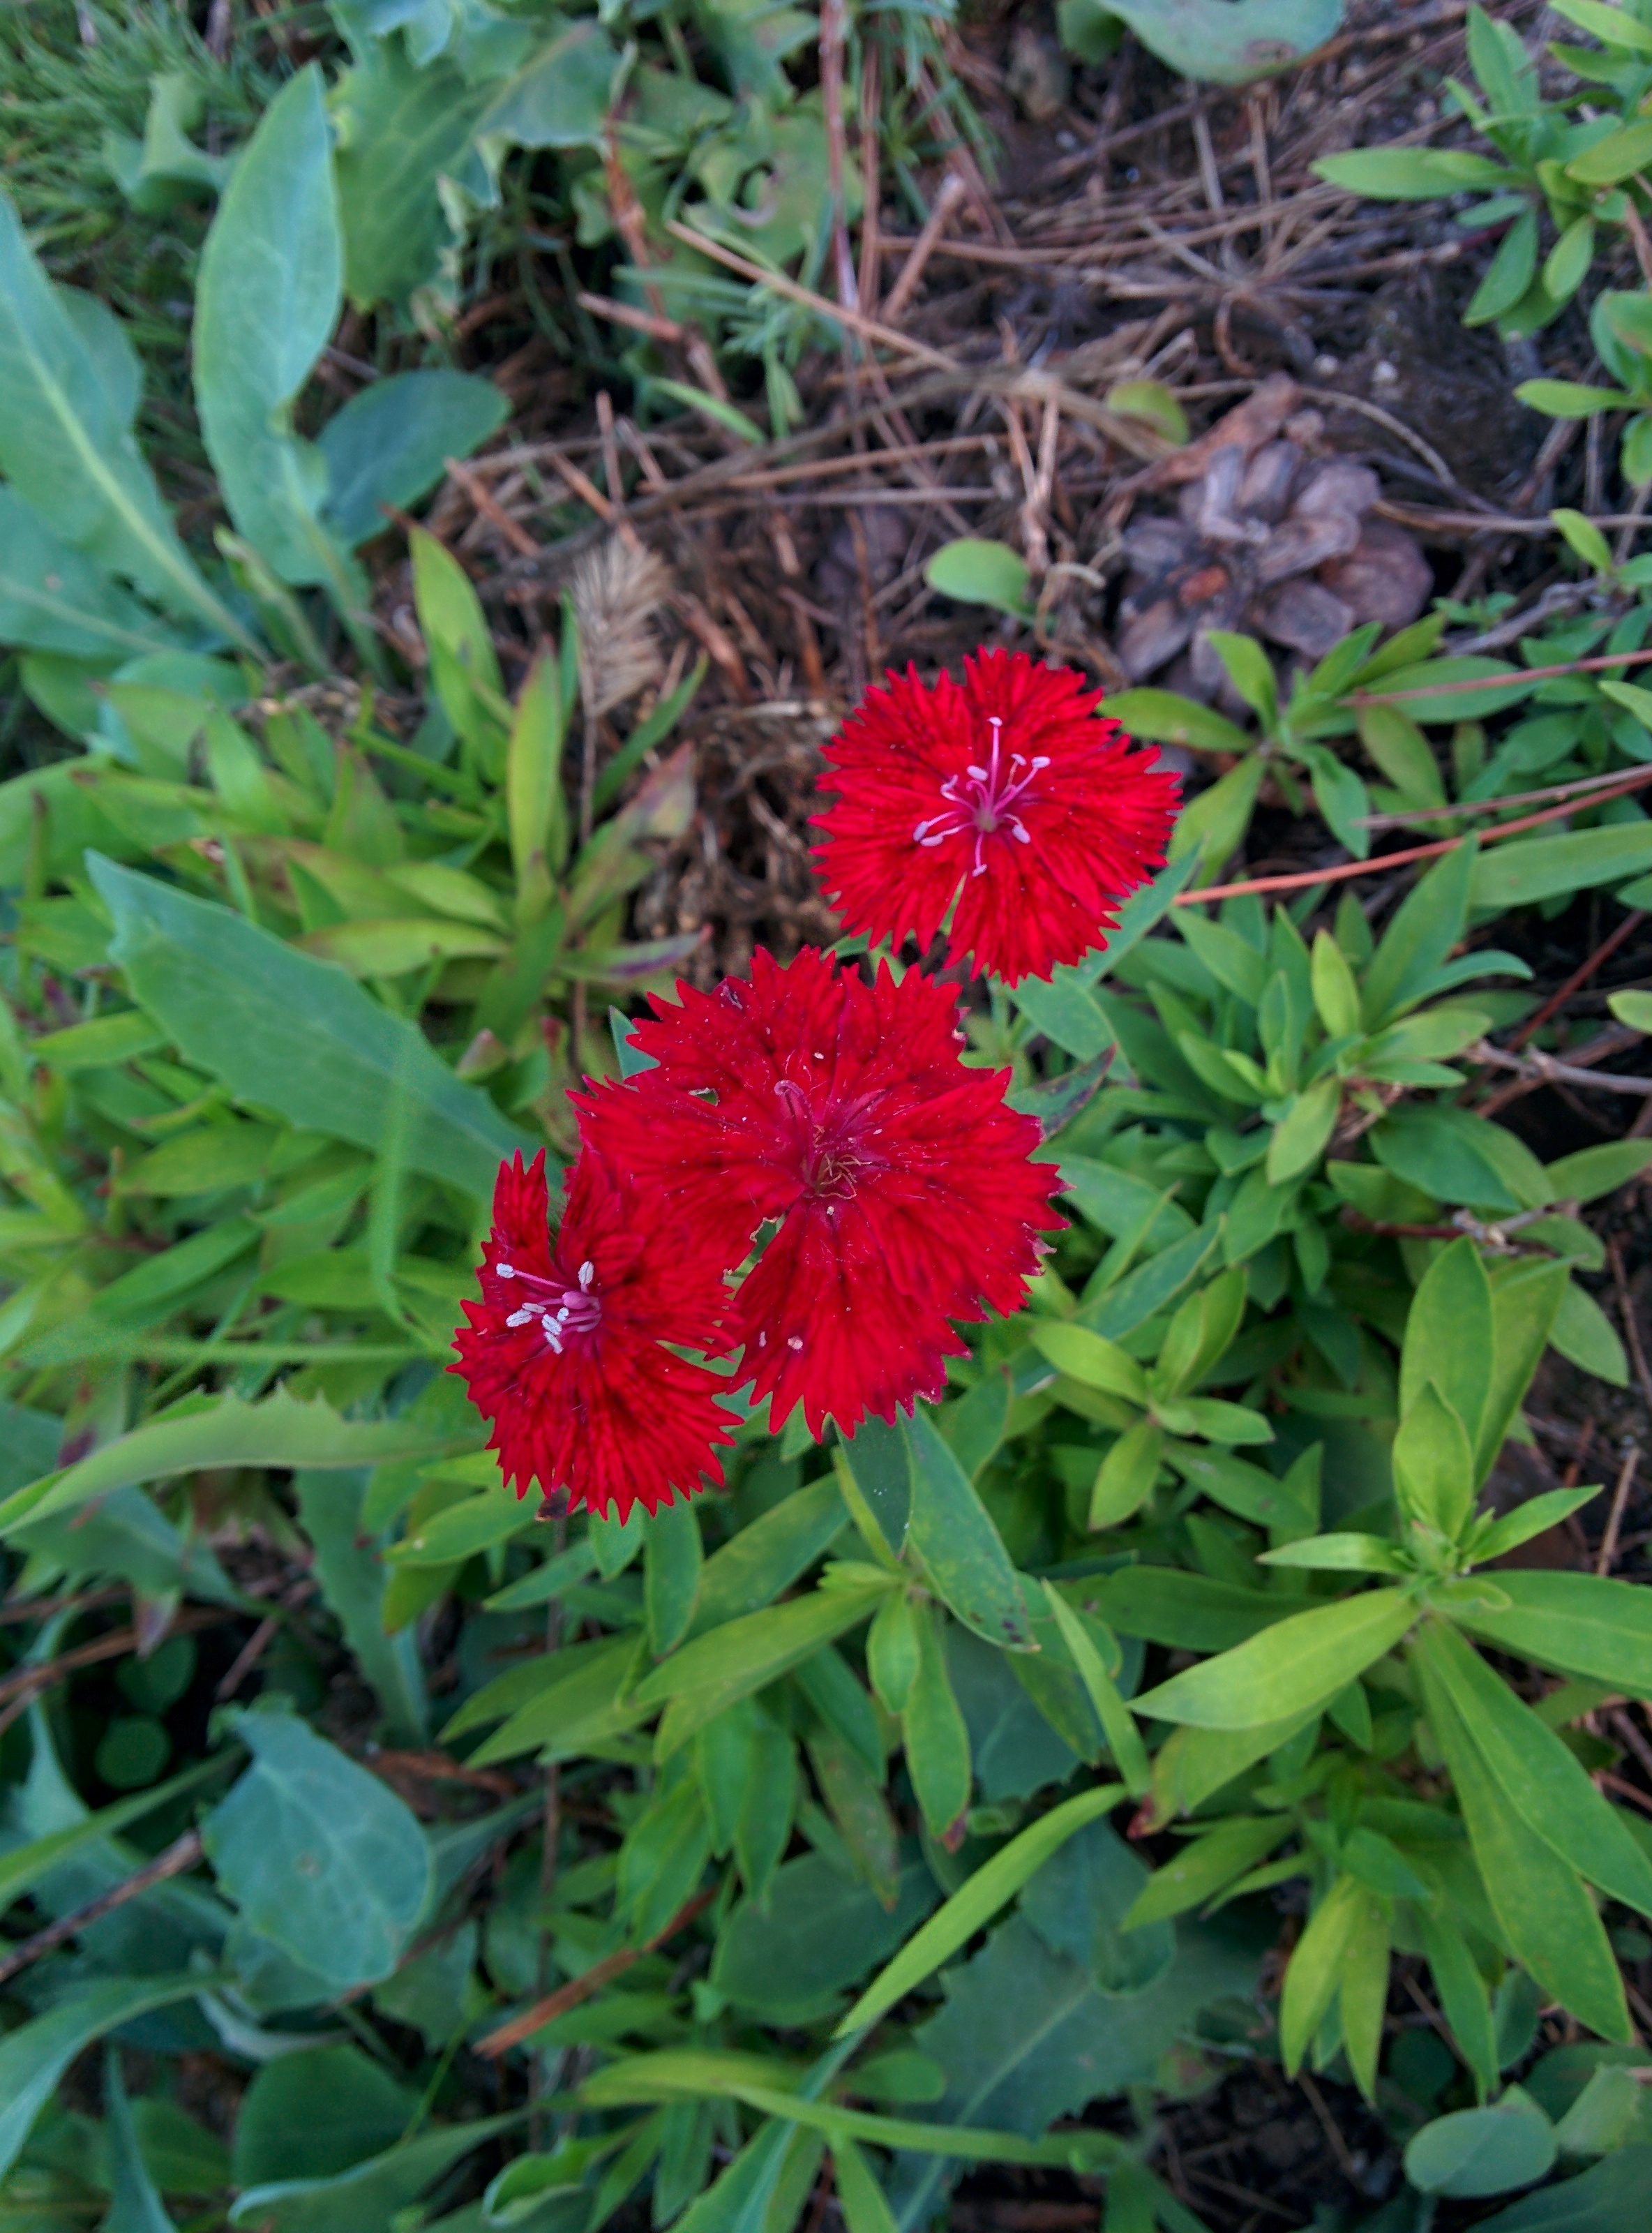 IMG_20150830_184440.jpg 들꽃처럼 자라는 카네이션 붉은 꽃